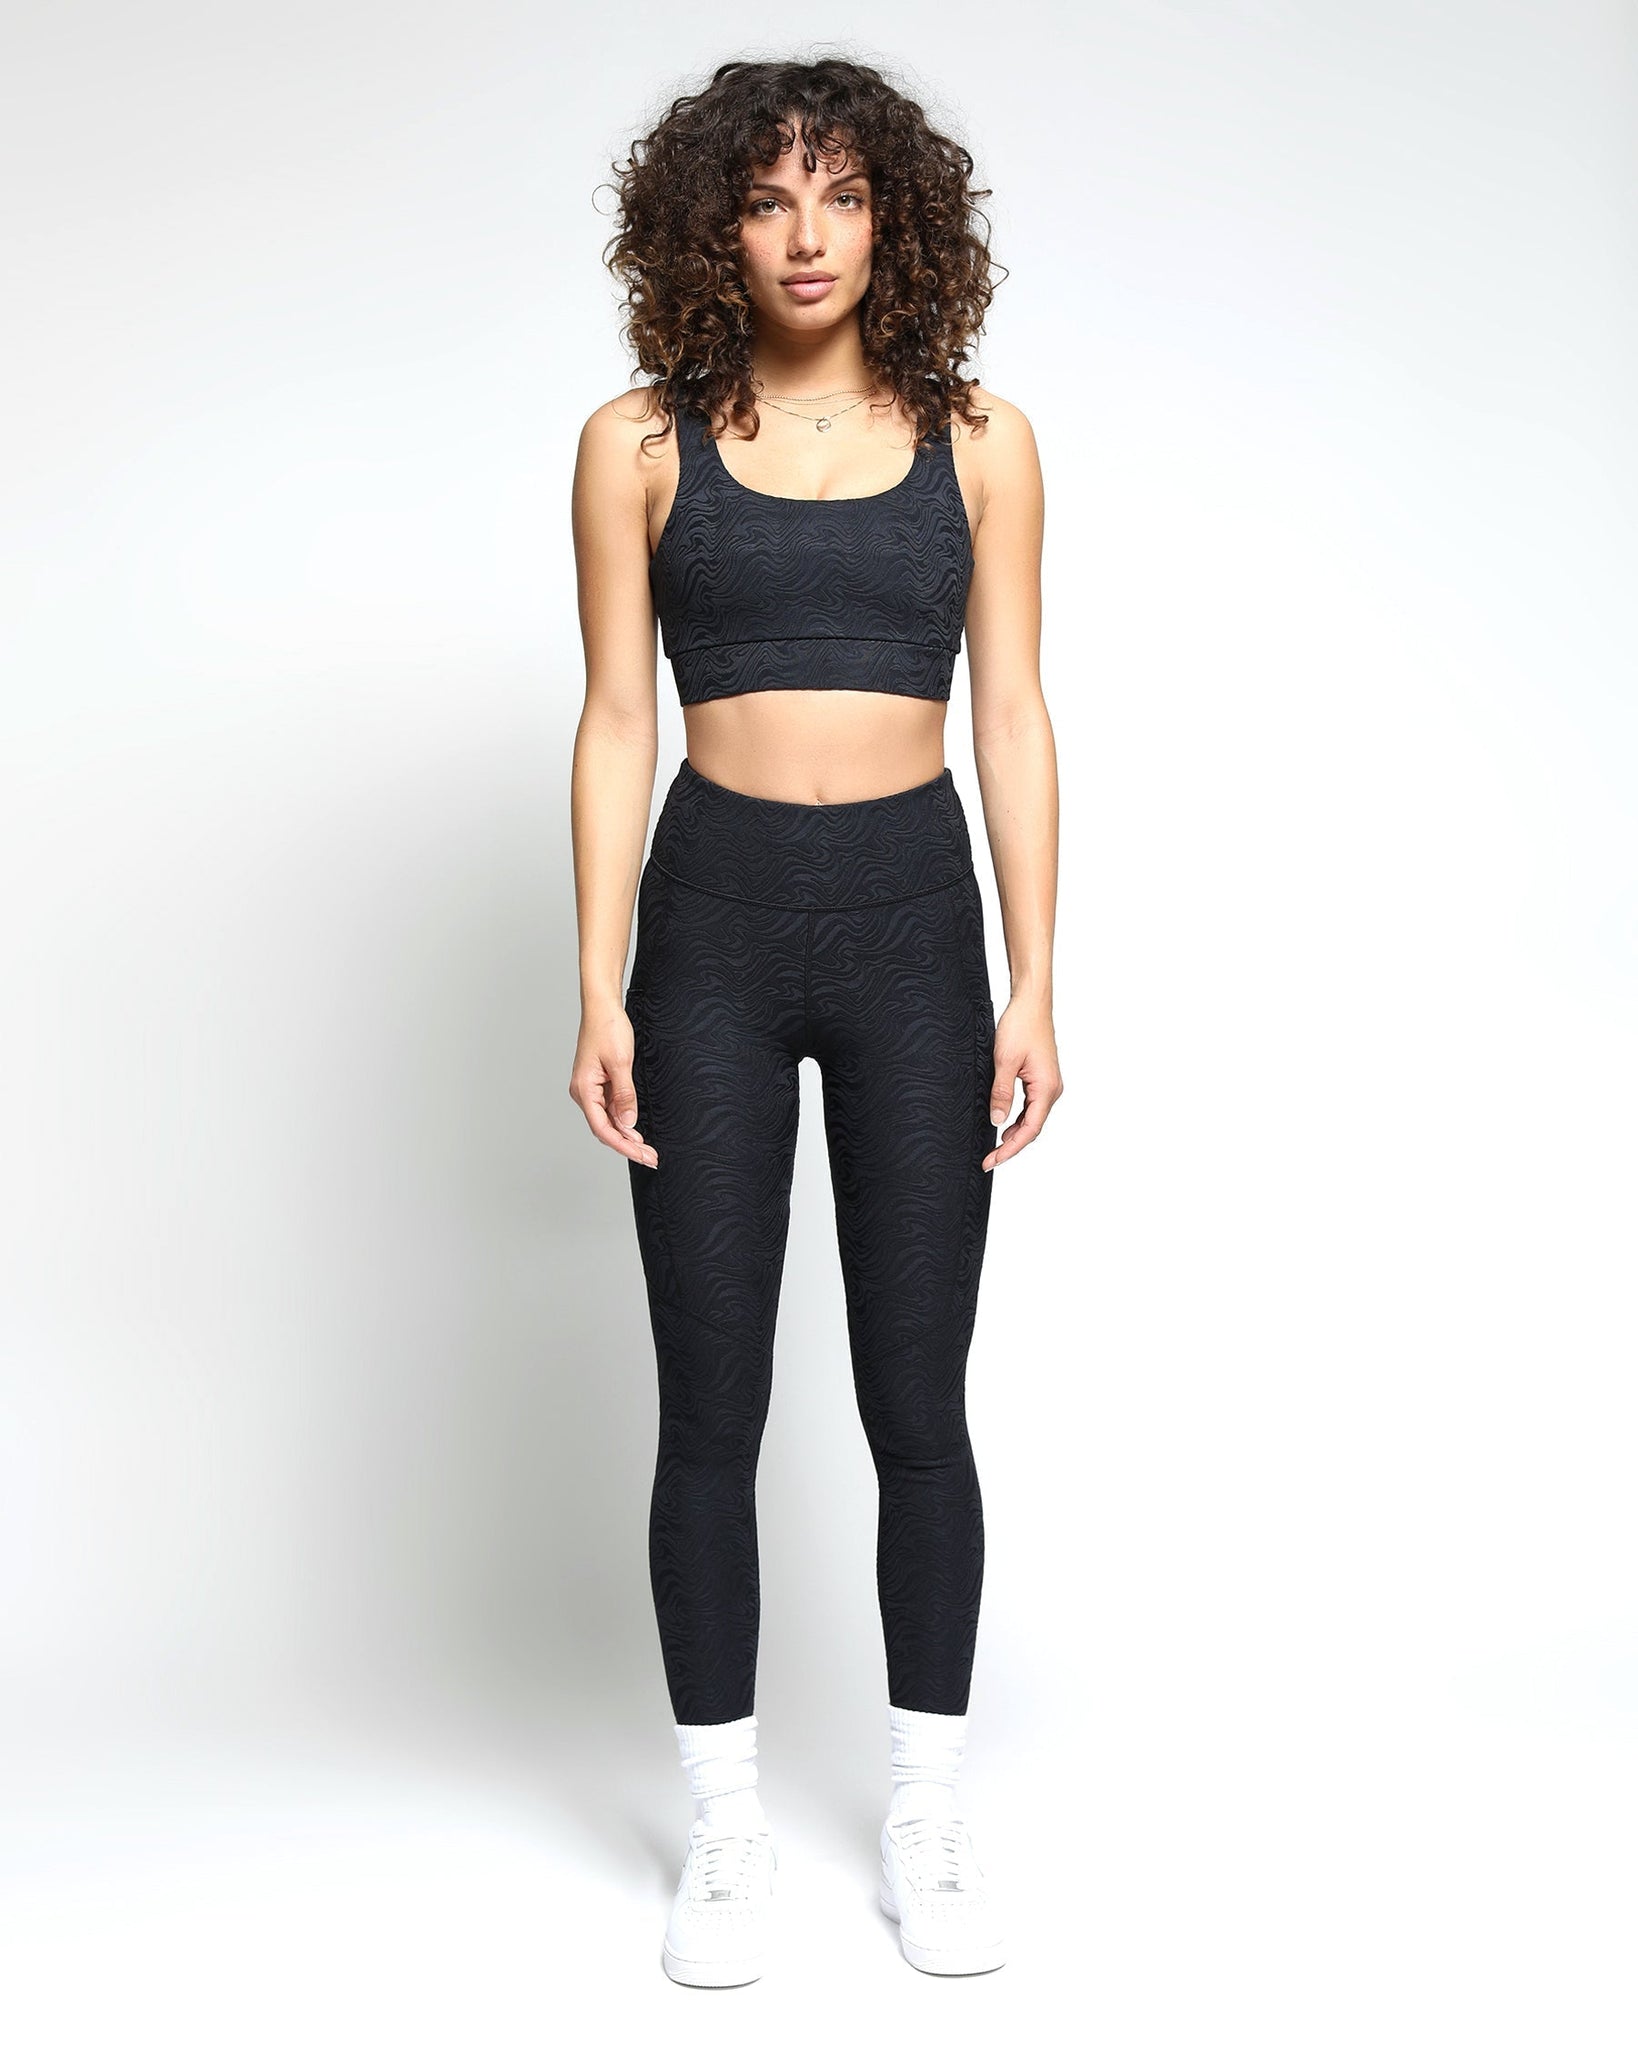 Moon Phases Black Leggings - XXL  Printed yoga pants, Affordable leggings,  Activewear sportswear